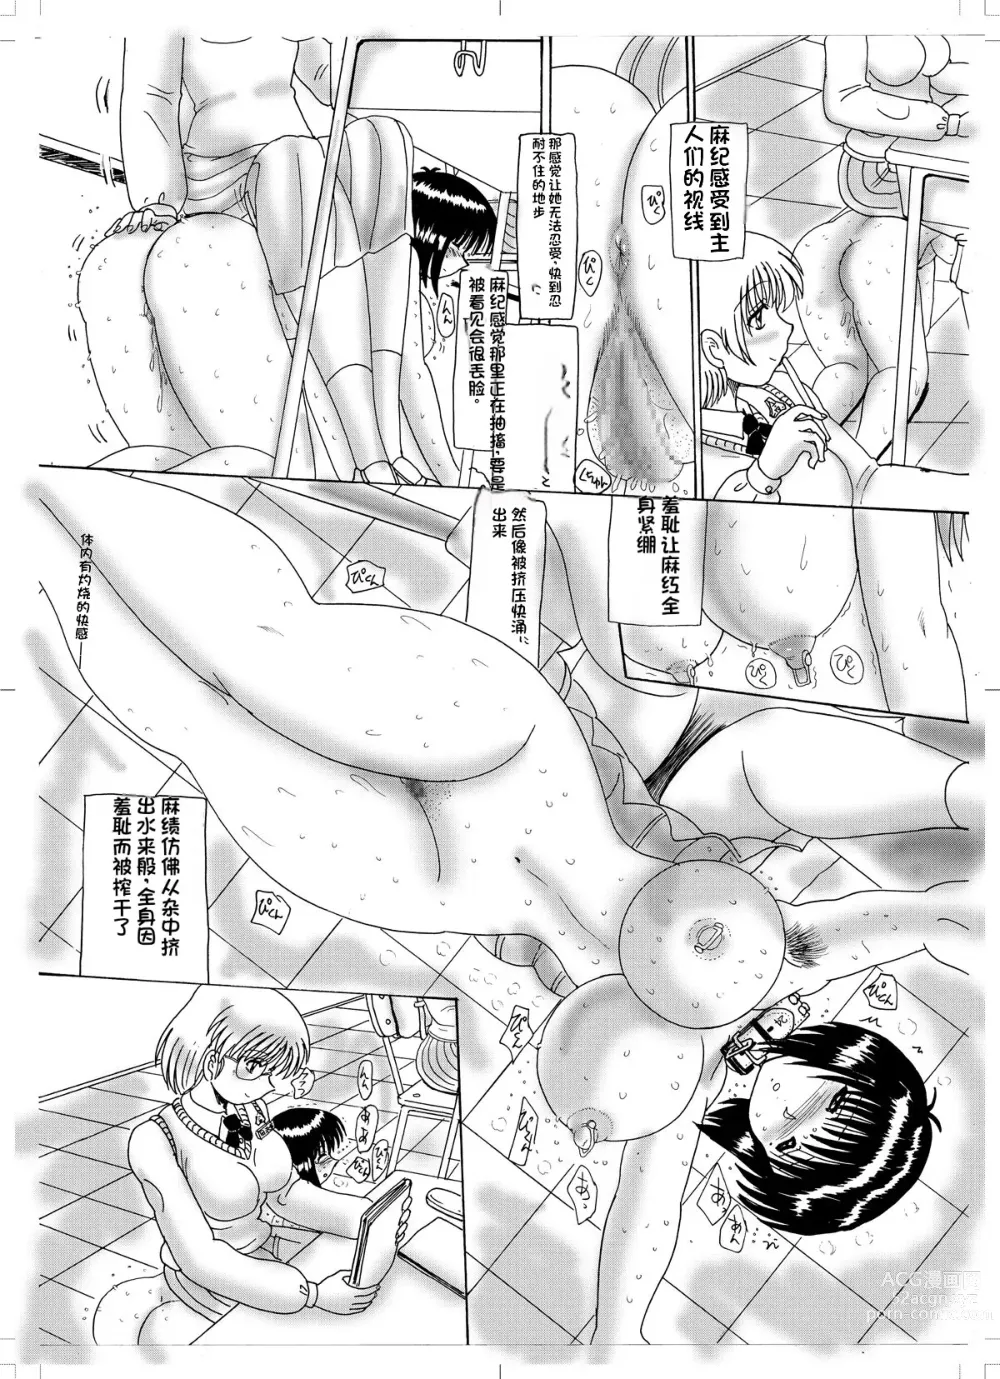 Page 27 of doujinshi マゾ奴隷麻紀-学校での風景